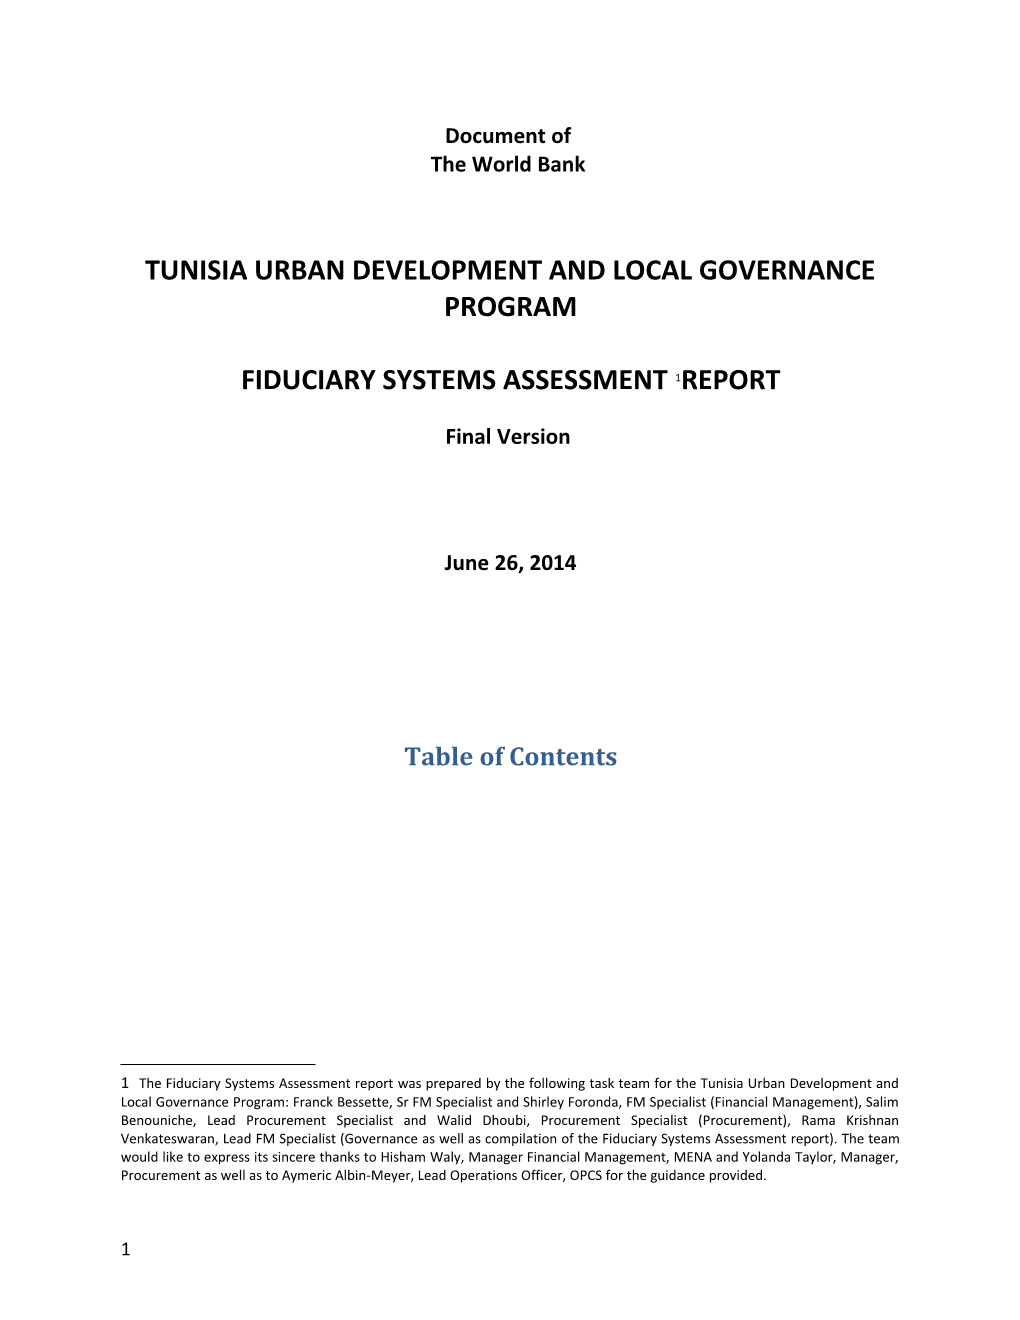 Tunisia Urban Development and Local Governance Program